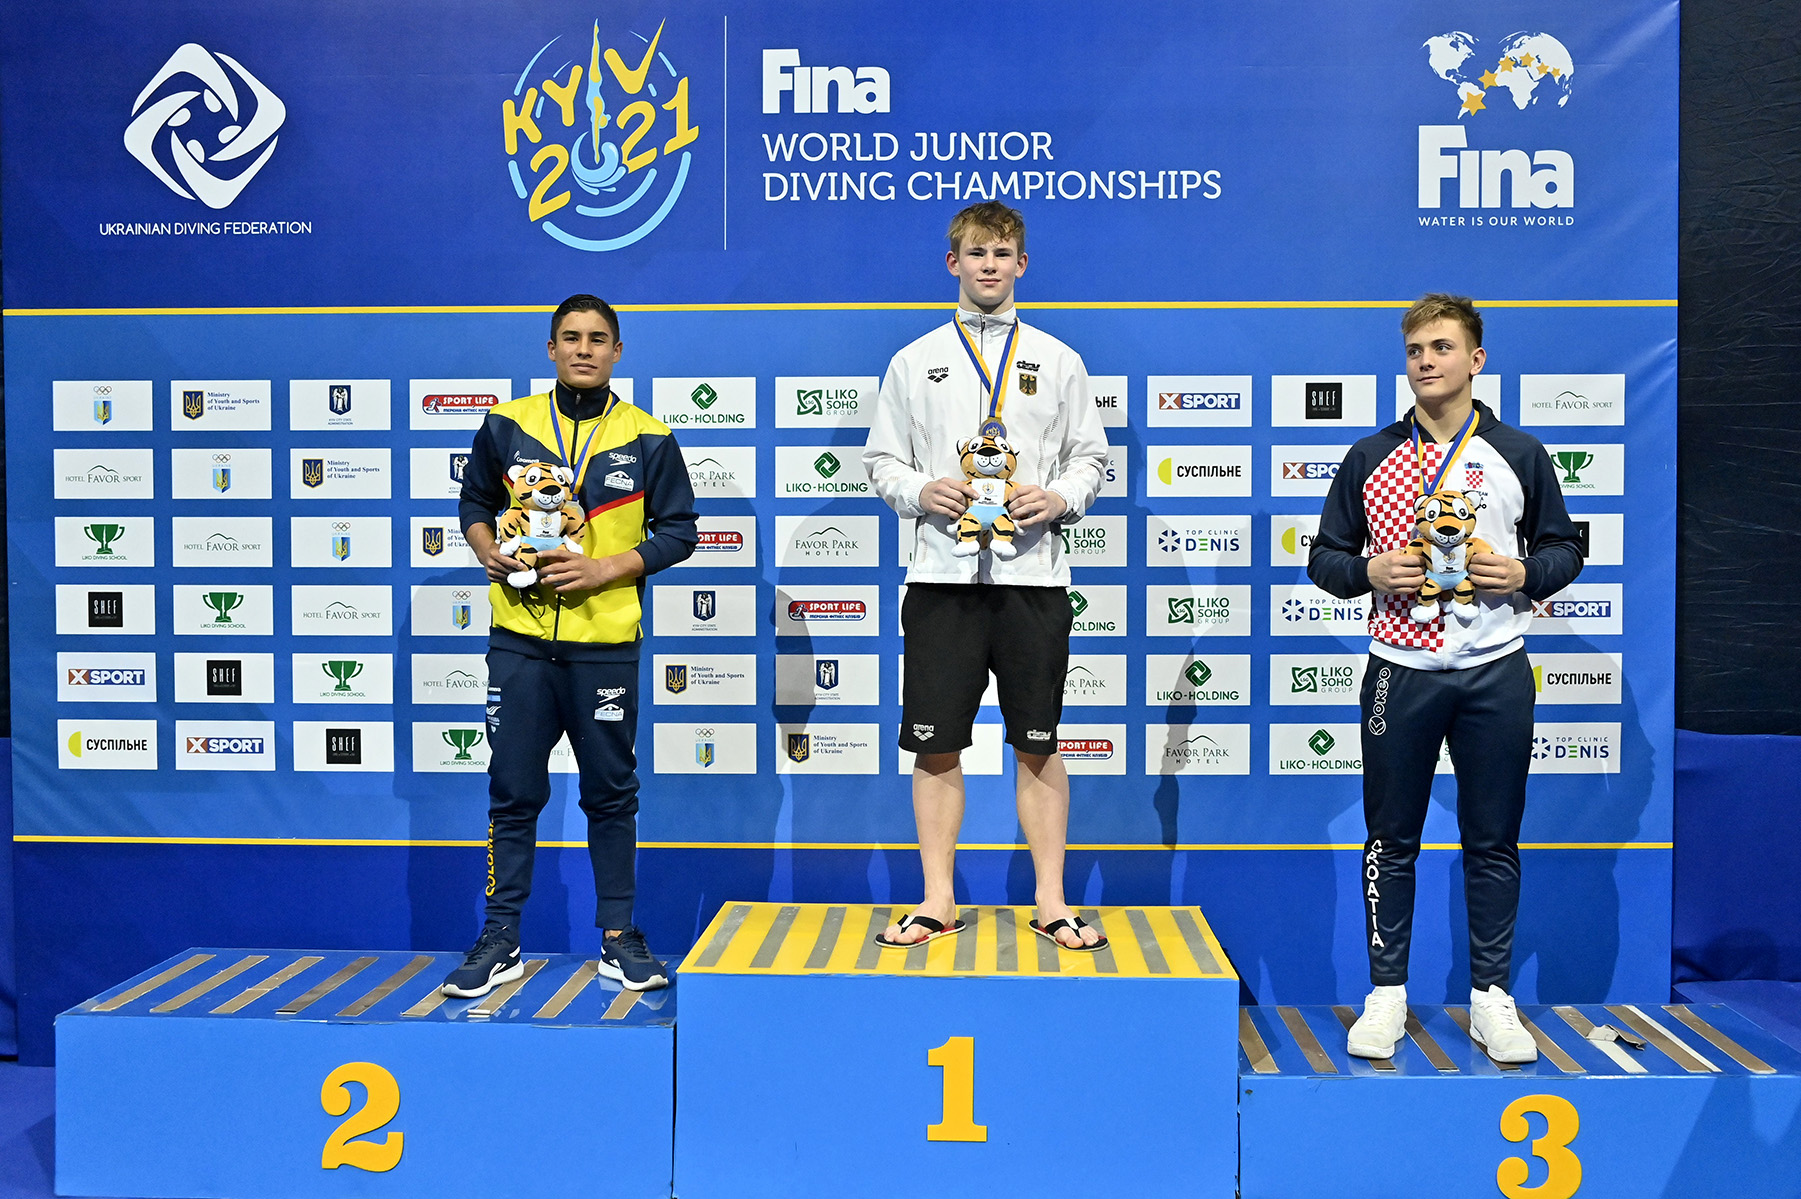 Jonathan Gisbert Schauer, the winner; Tomas Tamayo Meneses, siver medalist; Matej Neveskanin, bronze medalist.